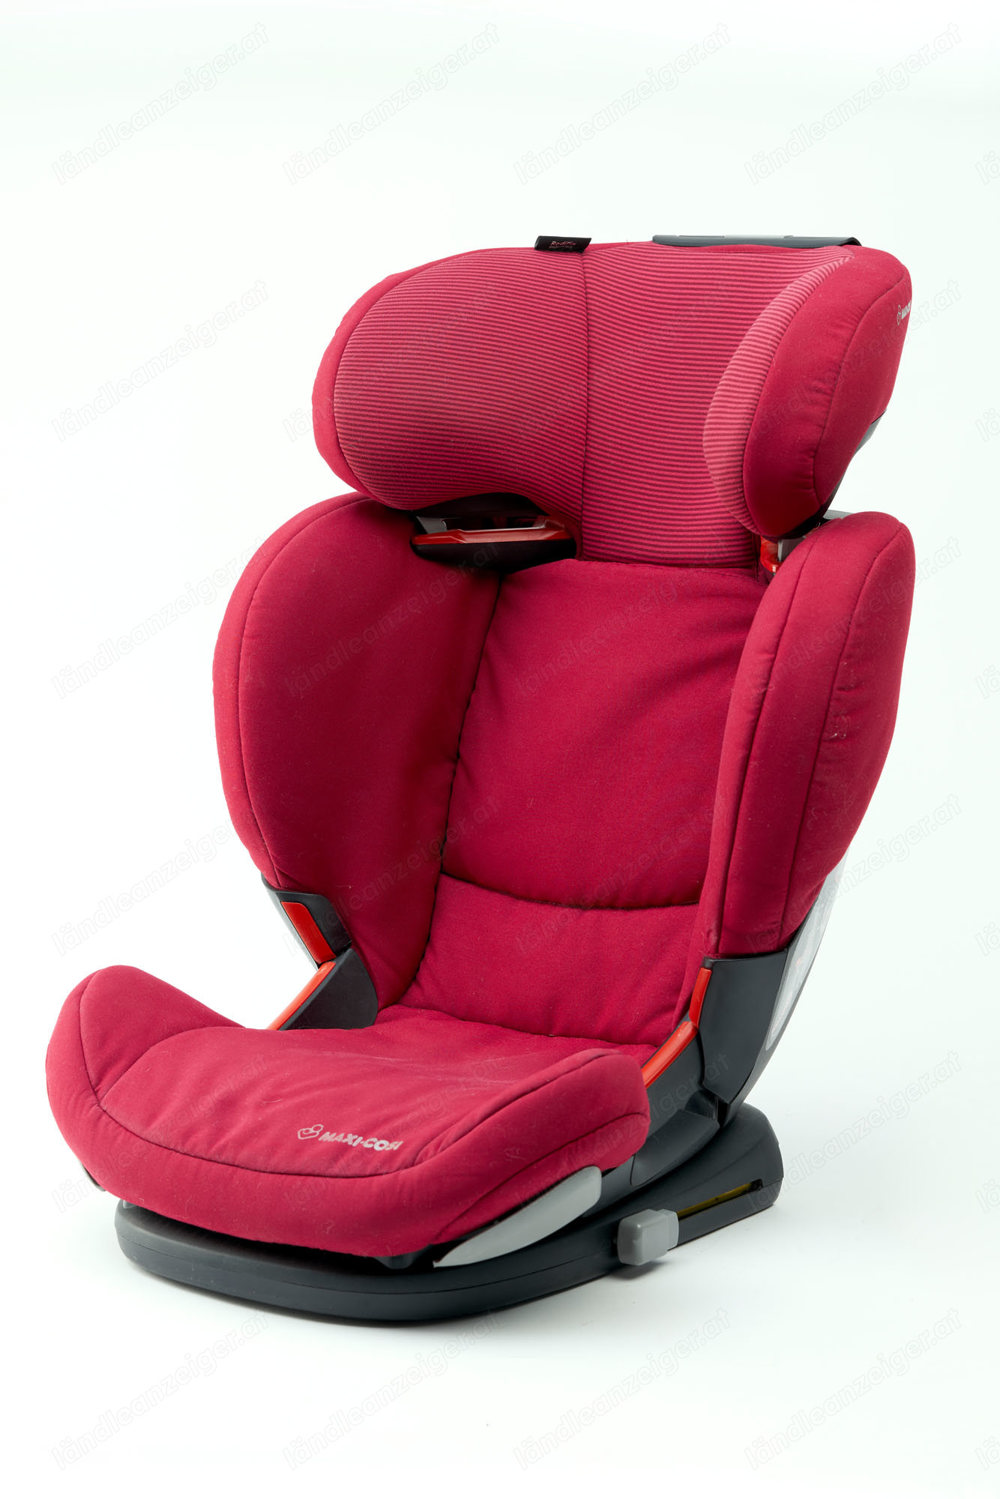 Kindersitz Maxi-Cosi in rot mit ISOFIX